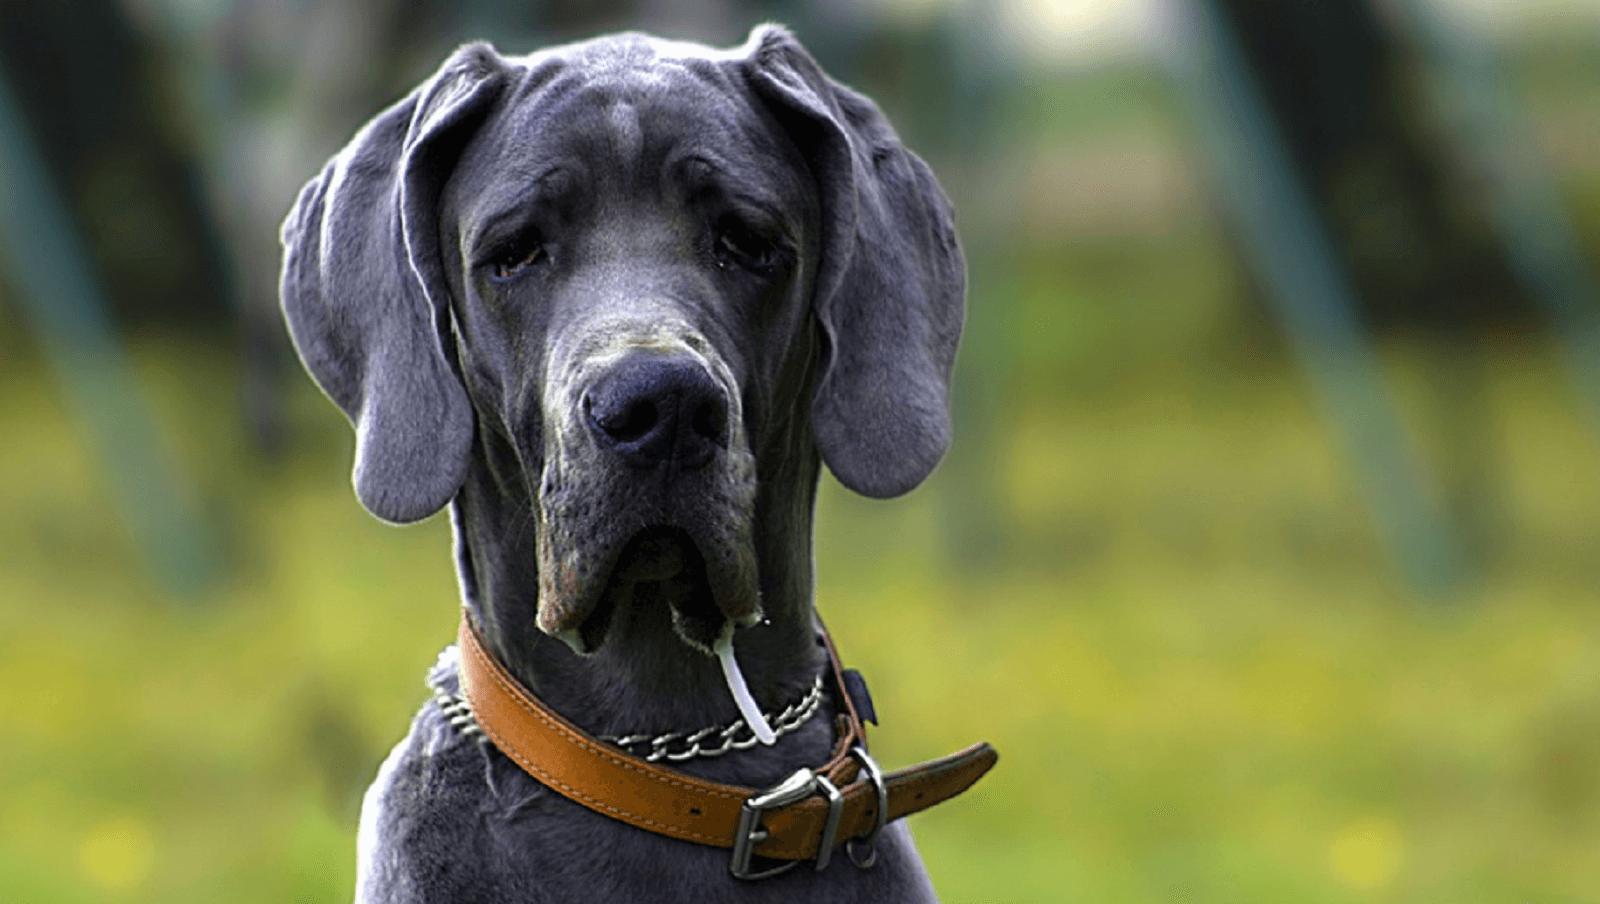 Great-Dane-Dog-Wearing-Color